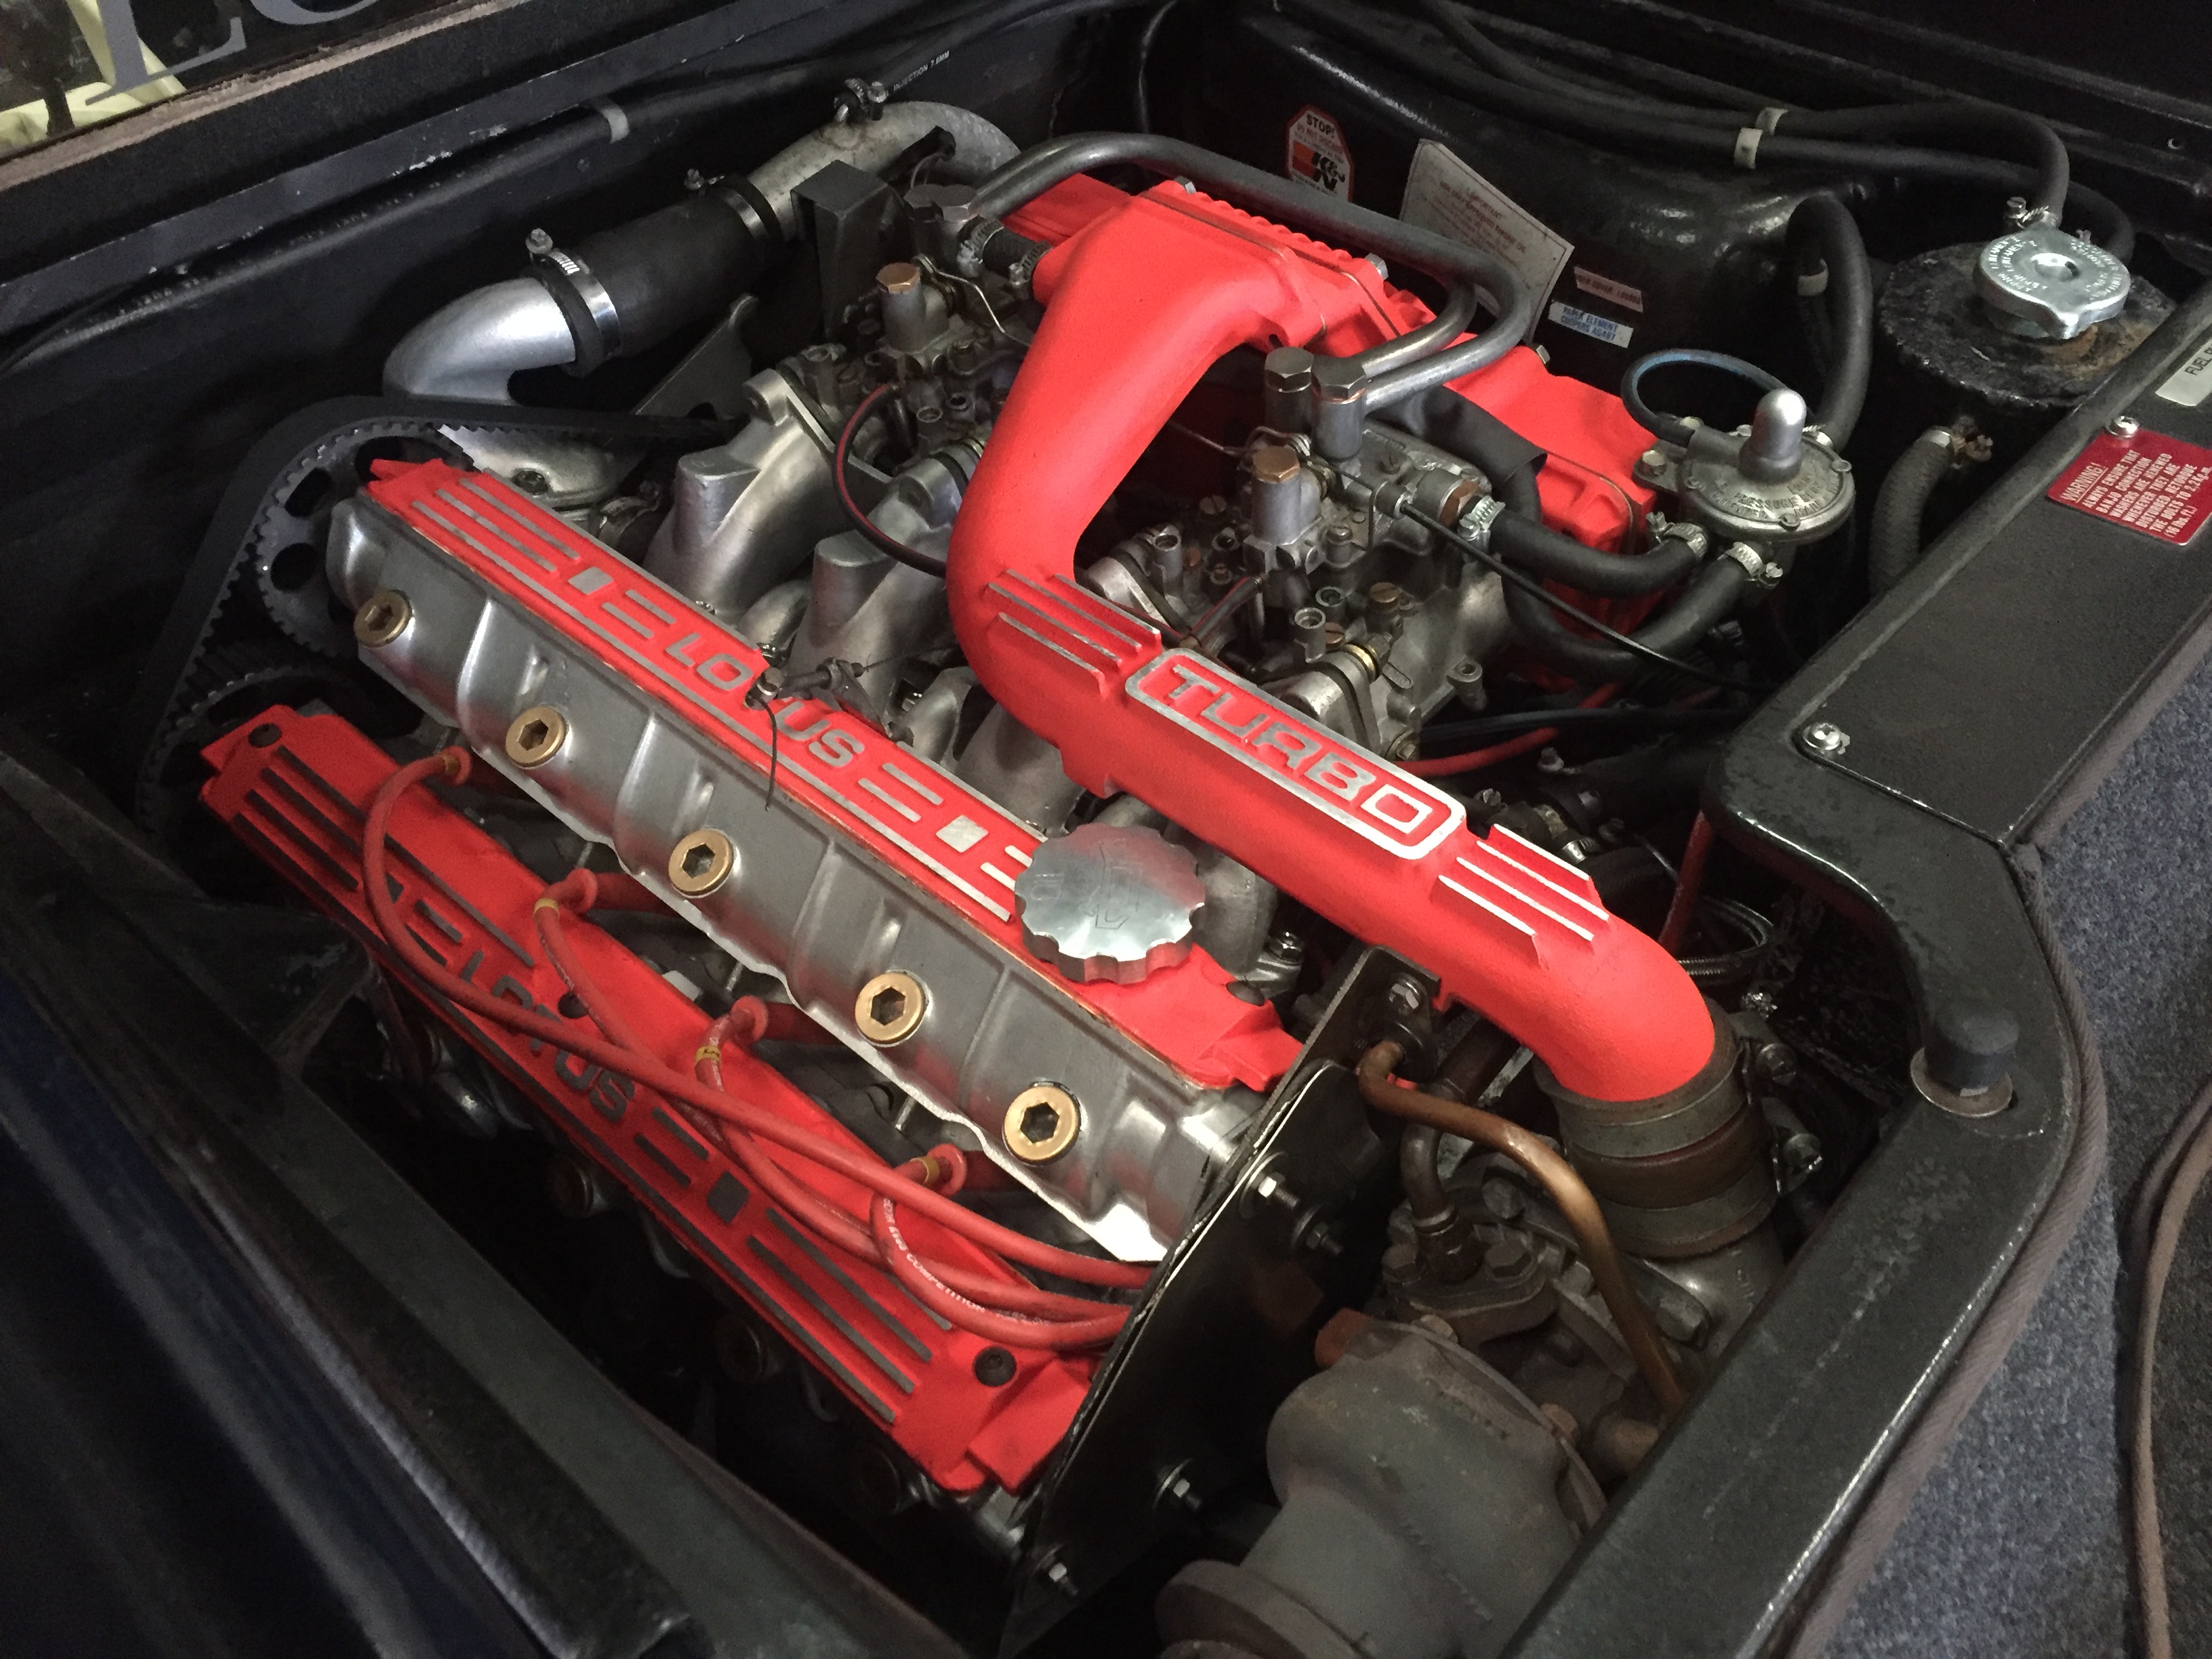 Lotus Esprit turbo top end engine rebuild for burnt out valve